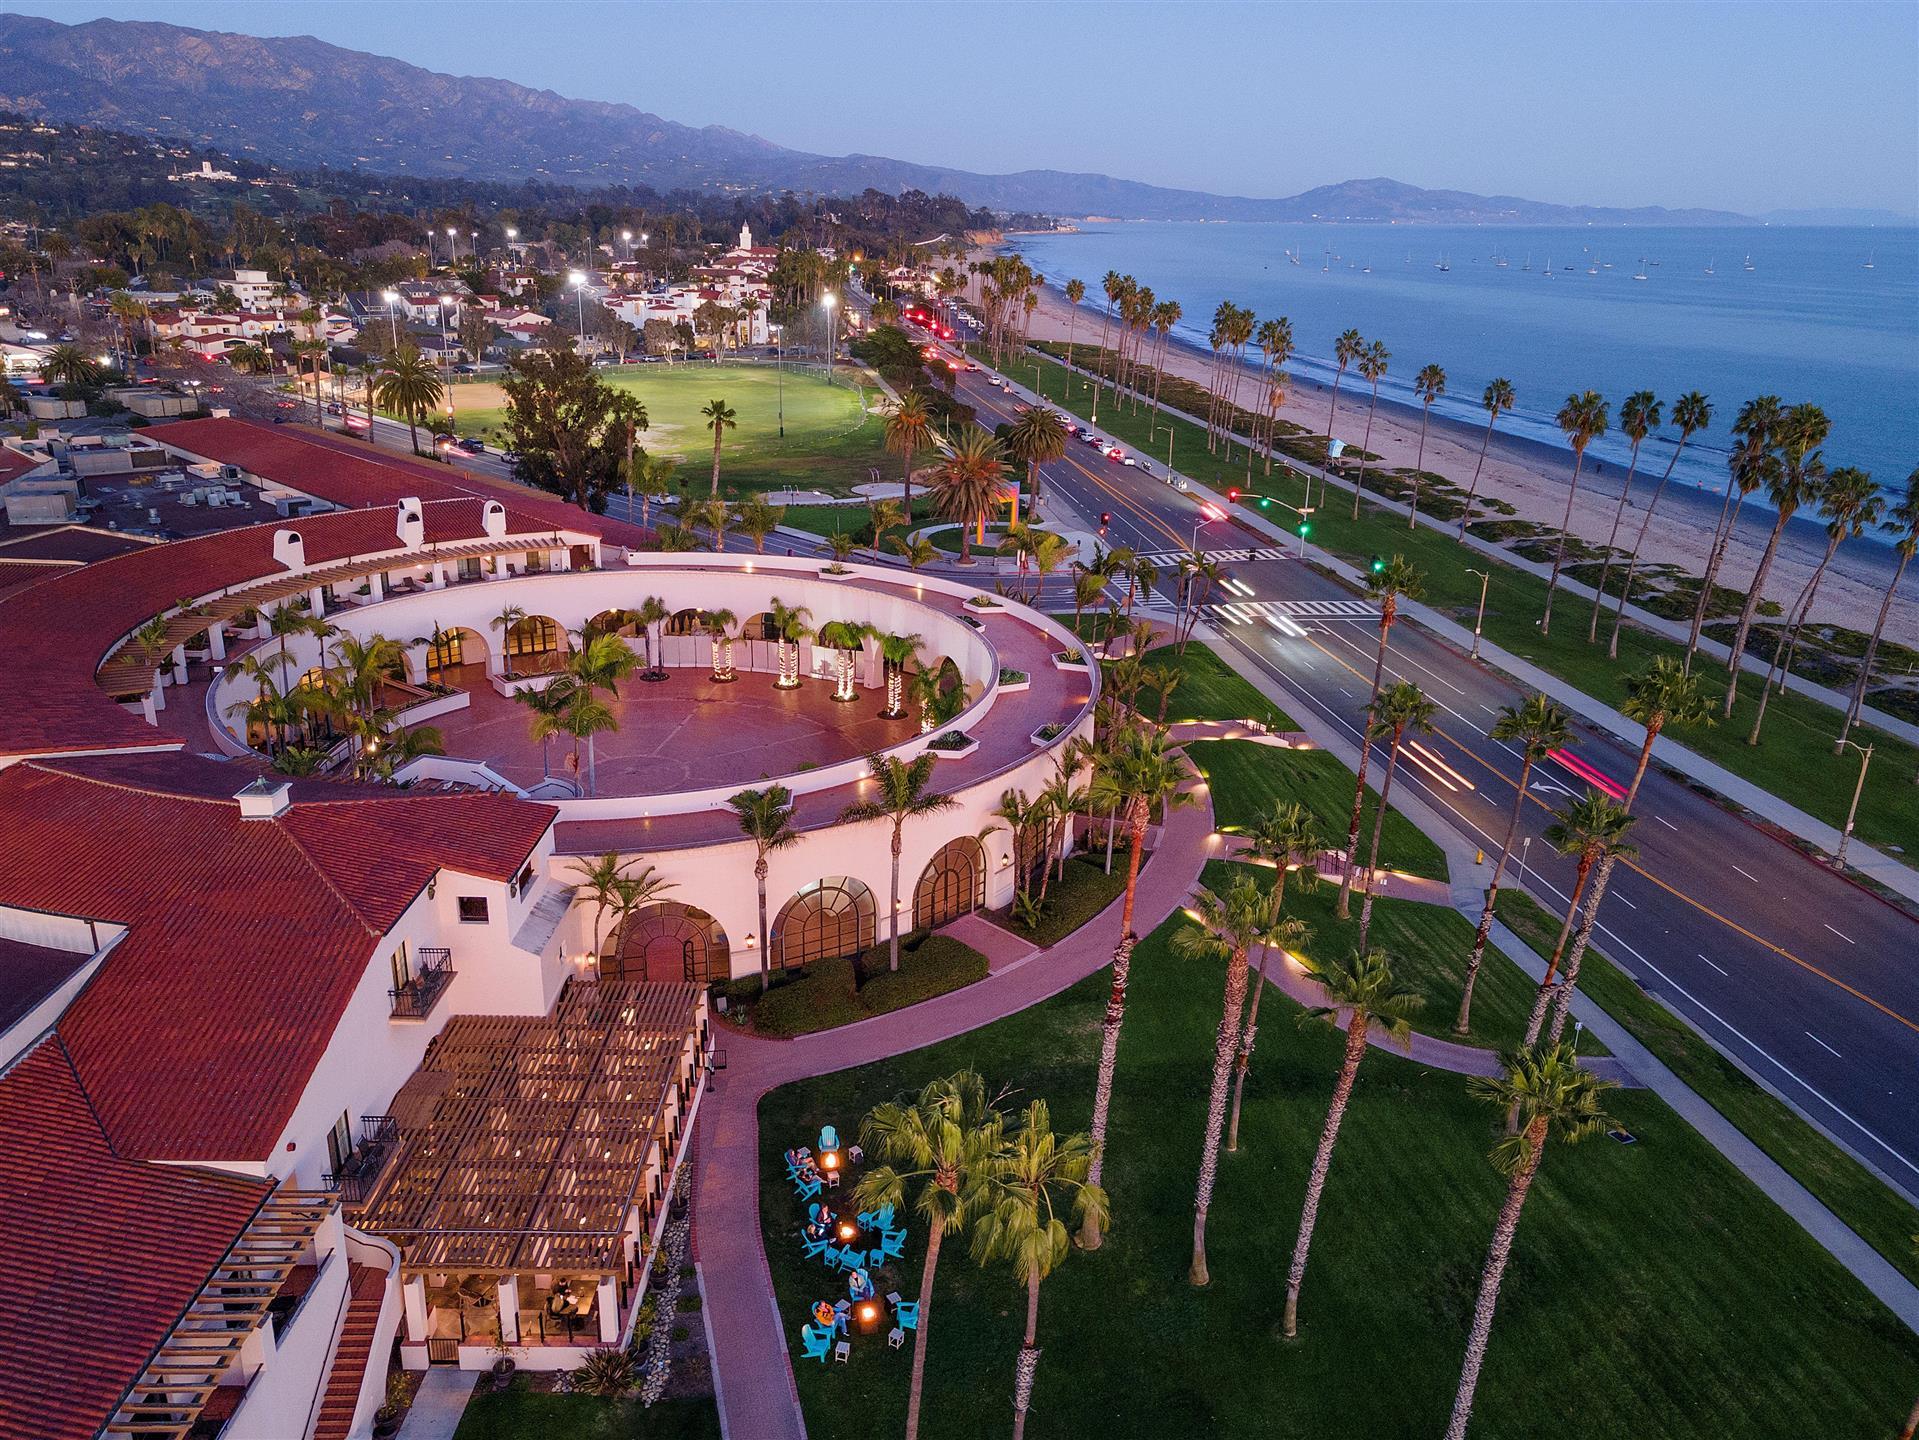 Hilton Santa Barbara Beachfront Resort in Santa Barbara, CA